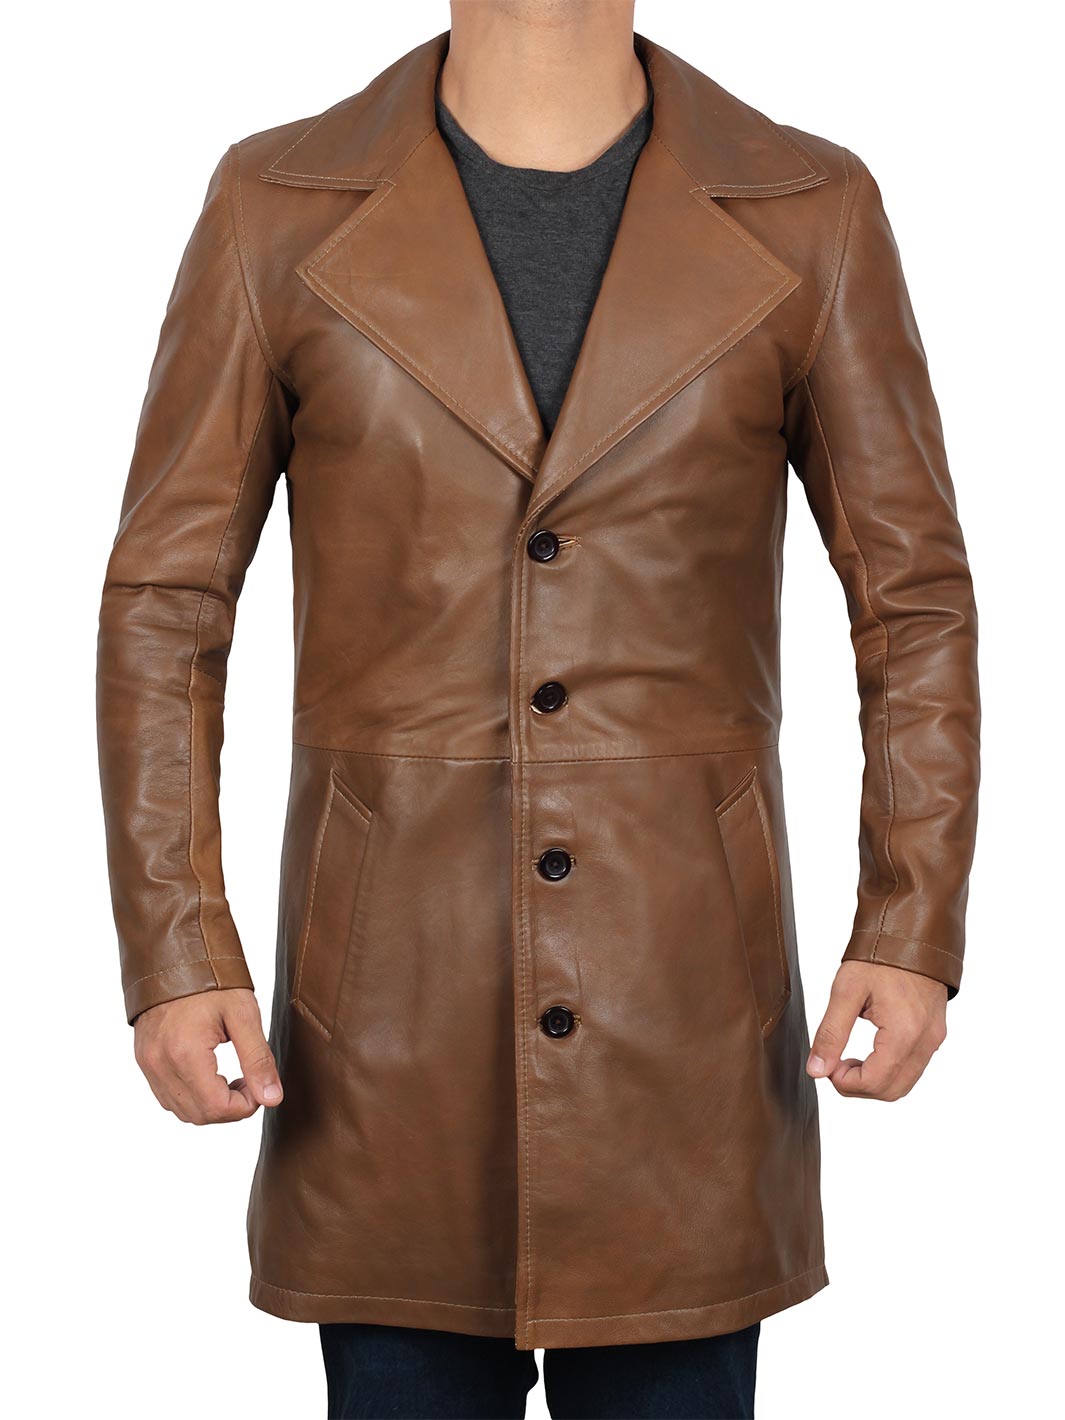 3/4 Length Leather Car Coat